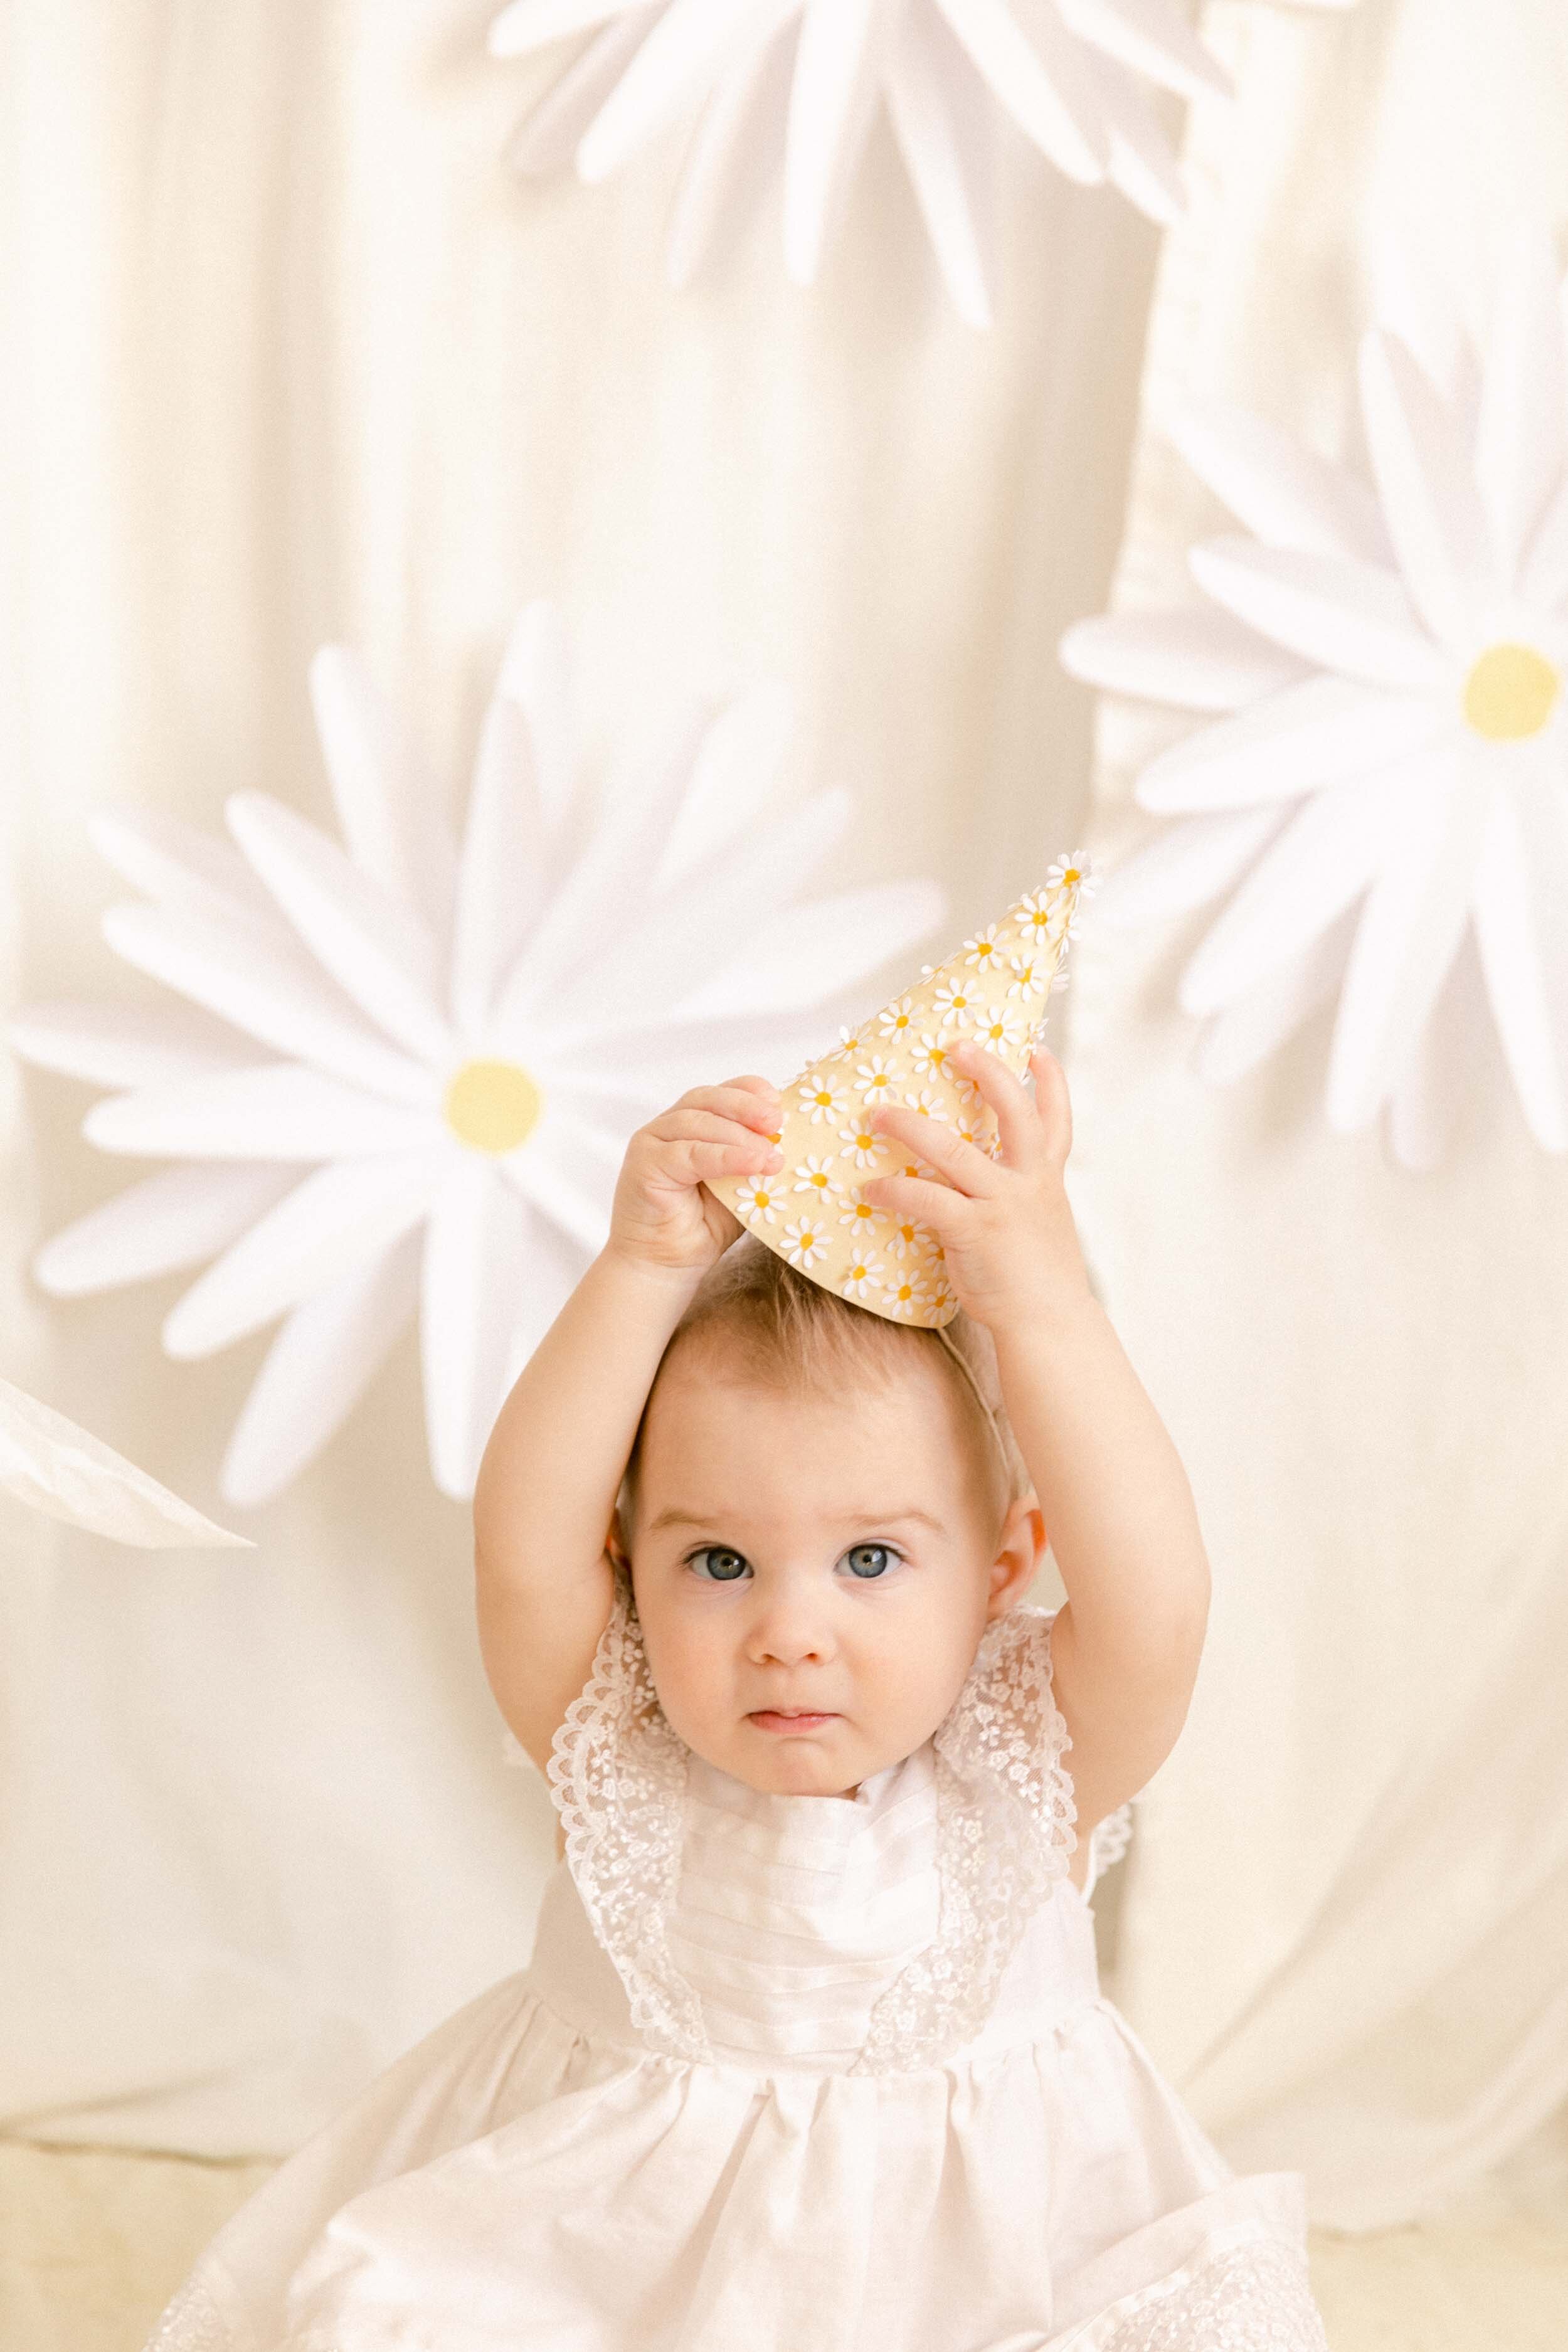 Baby's first birthday daisy themed party inspiration Calgary Photographer Jennie Guenard Photography